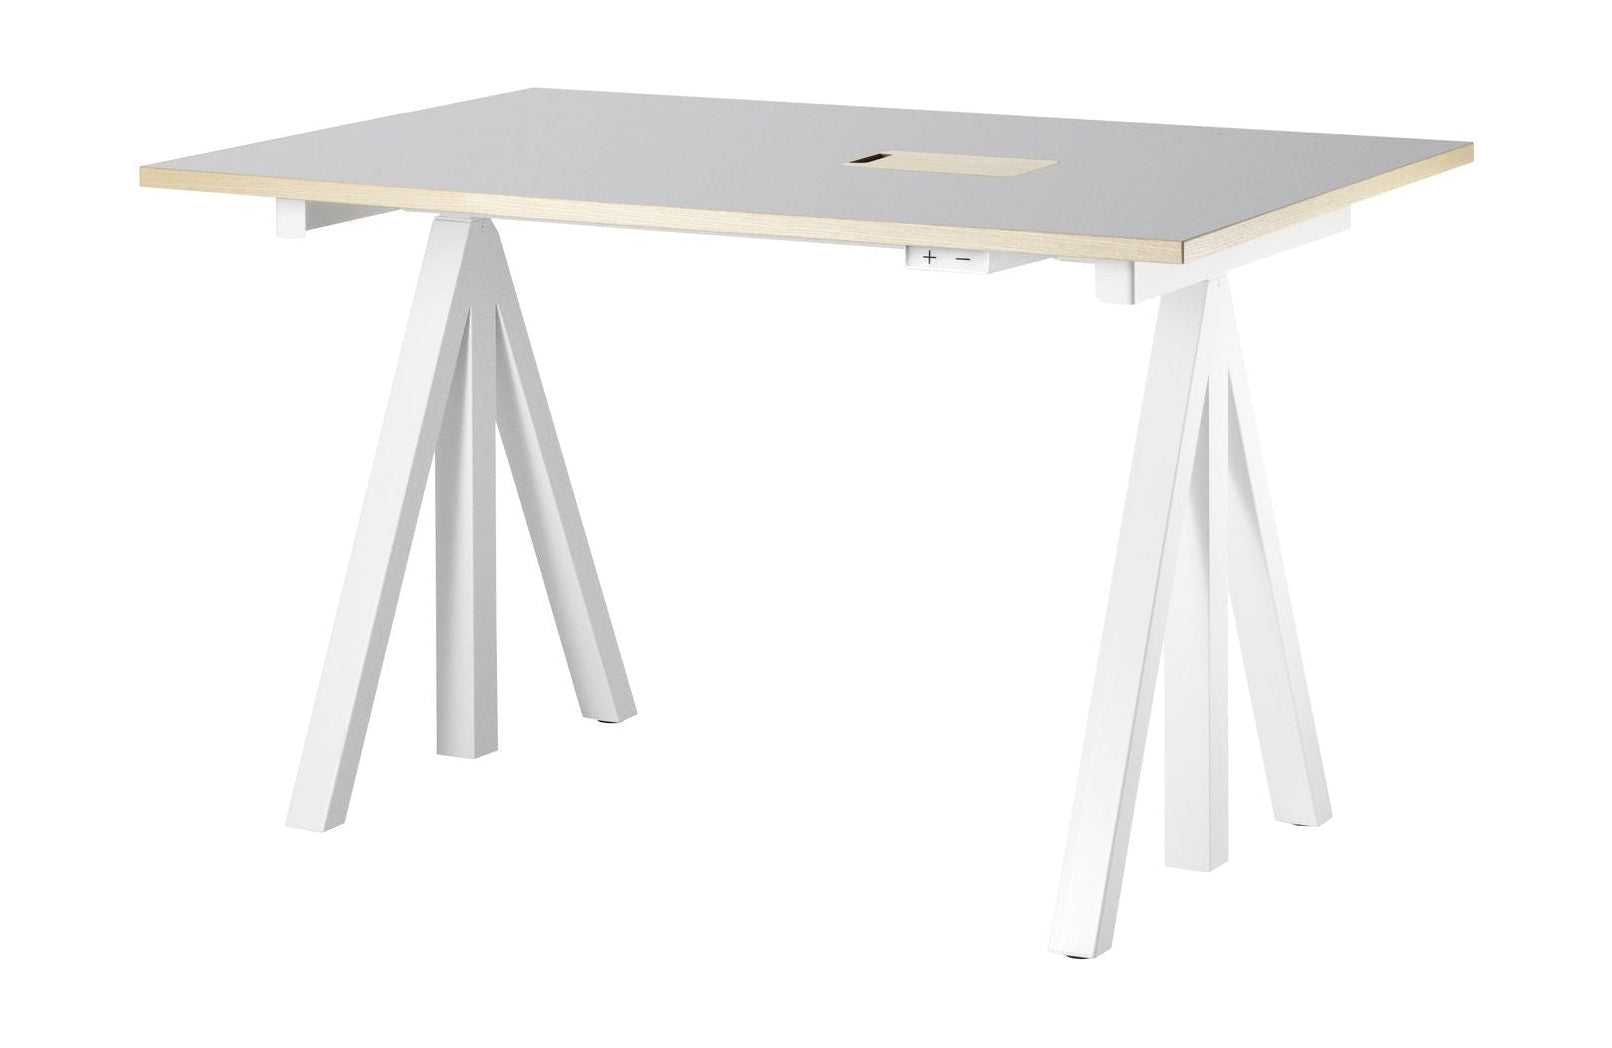 String Furniture Works Work Table 78x120 Cm, Light Grey Linoleum